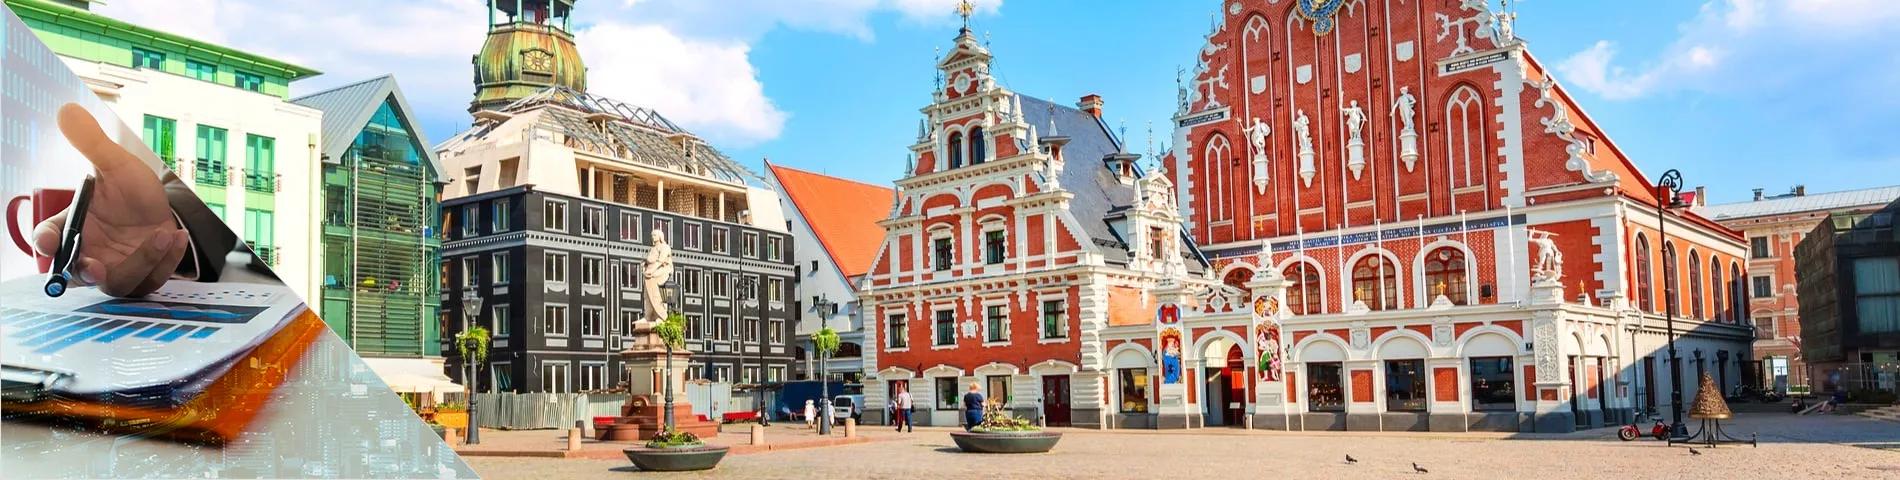 Riga - Bankacılık ve Finans